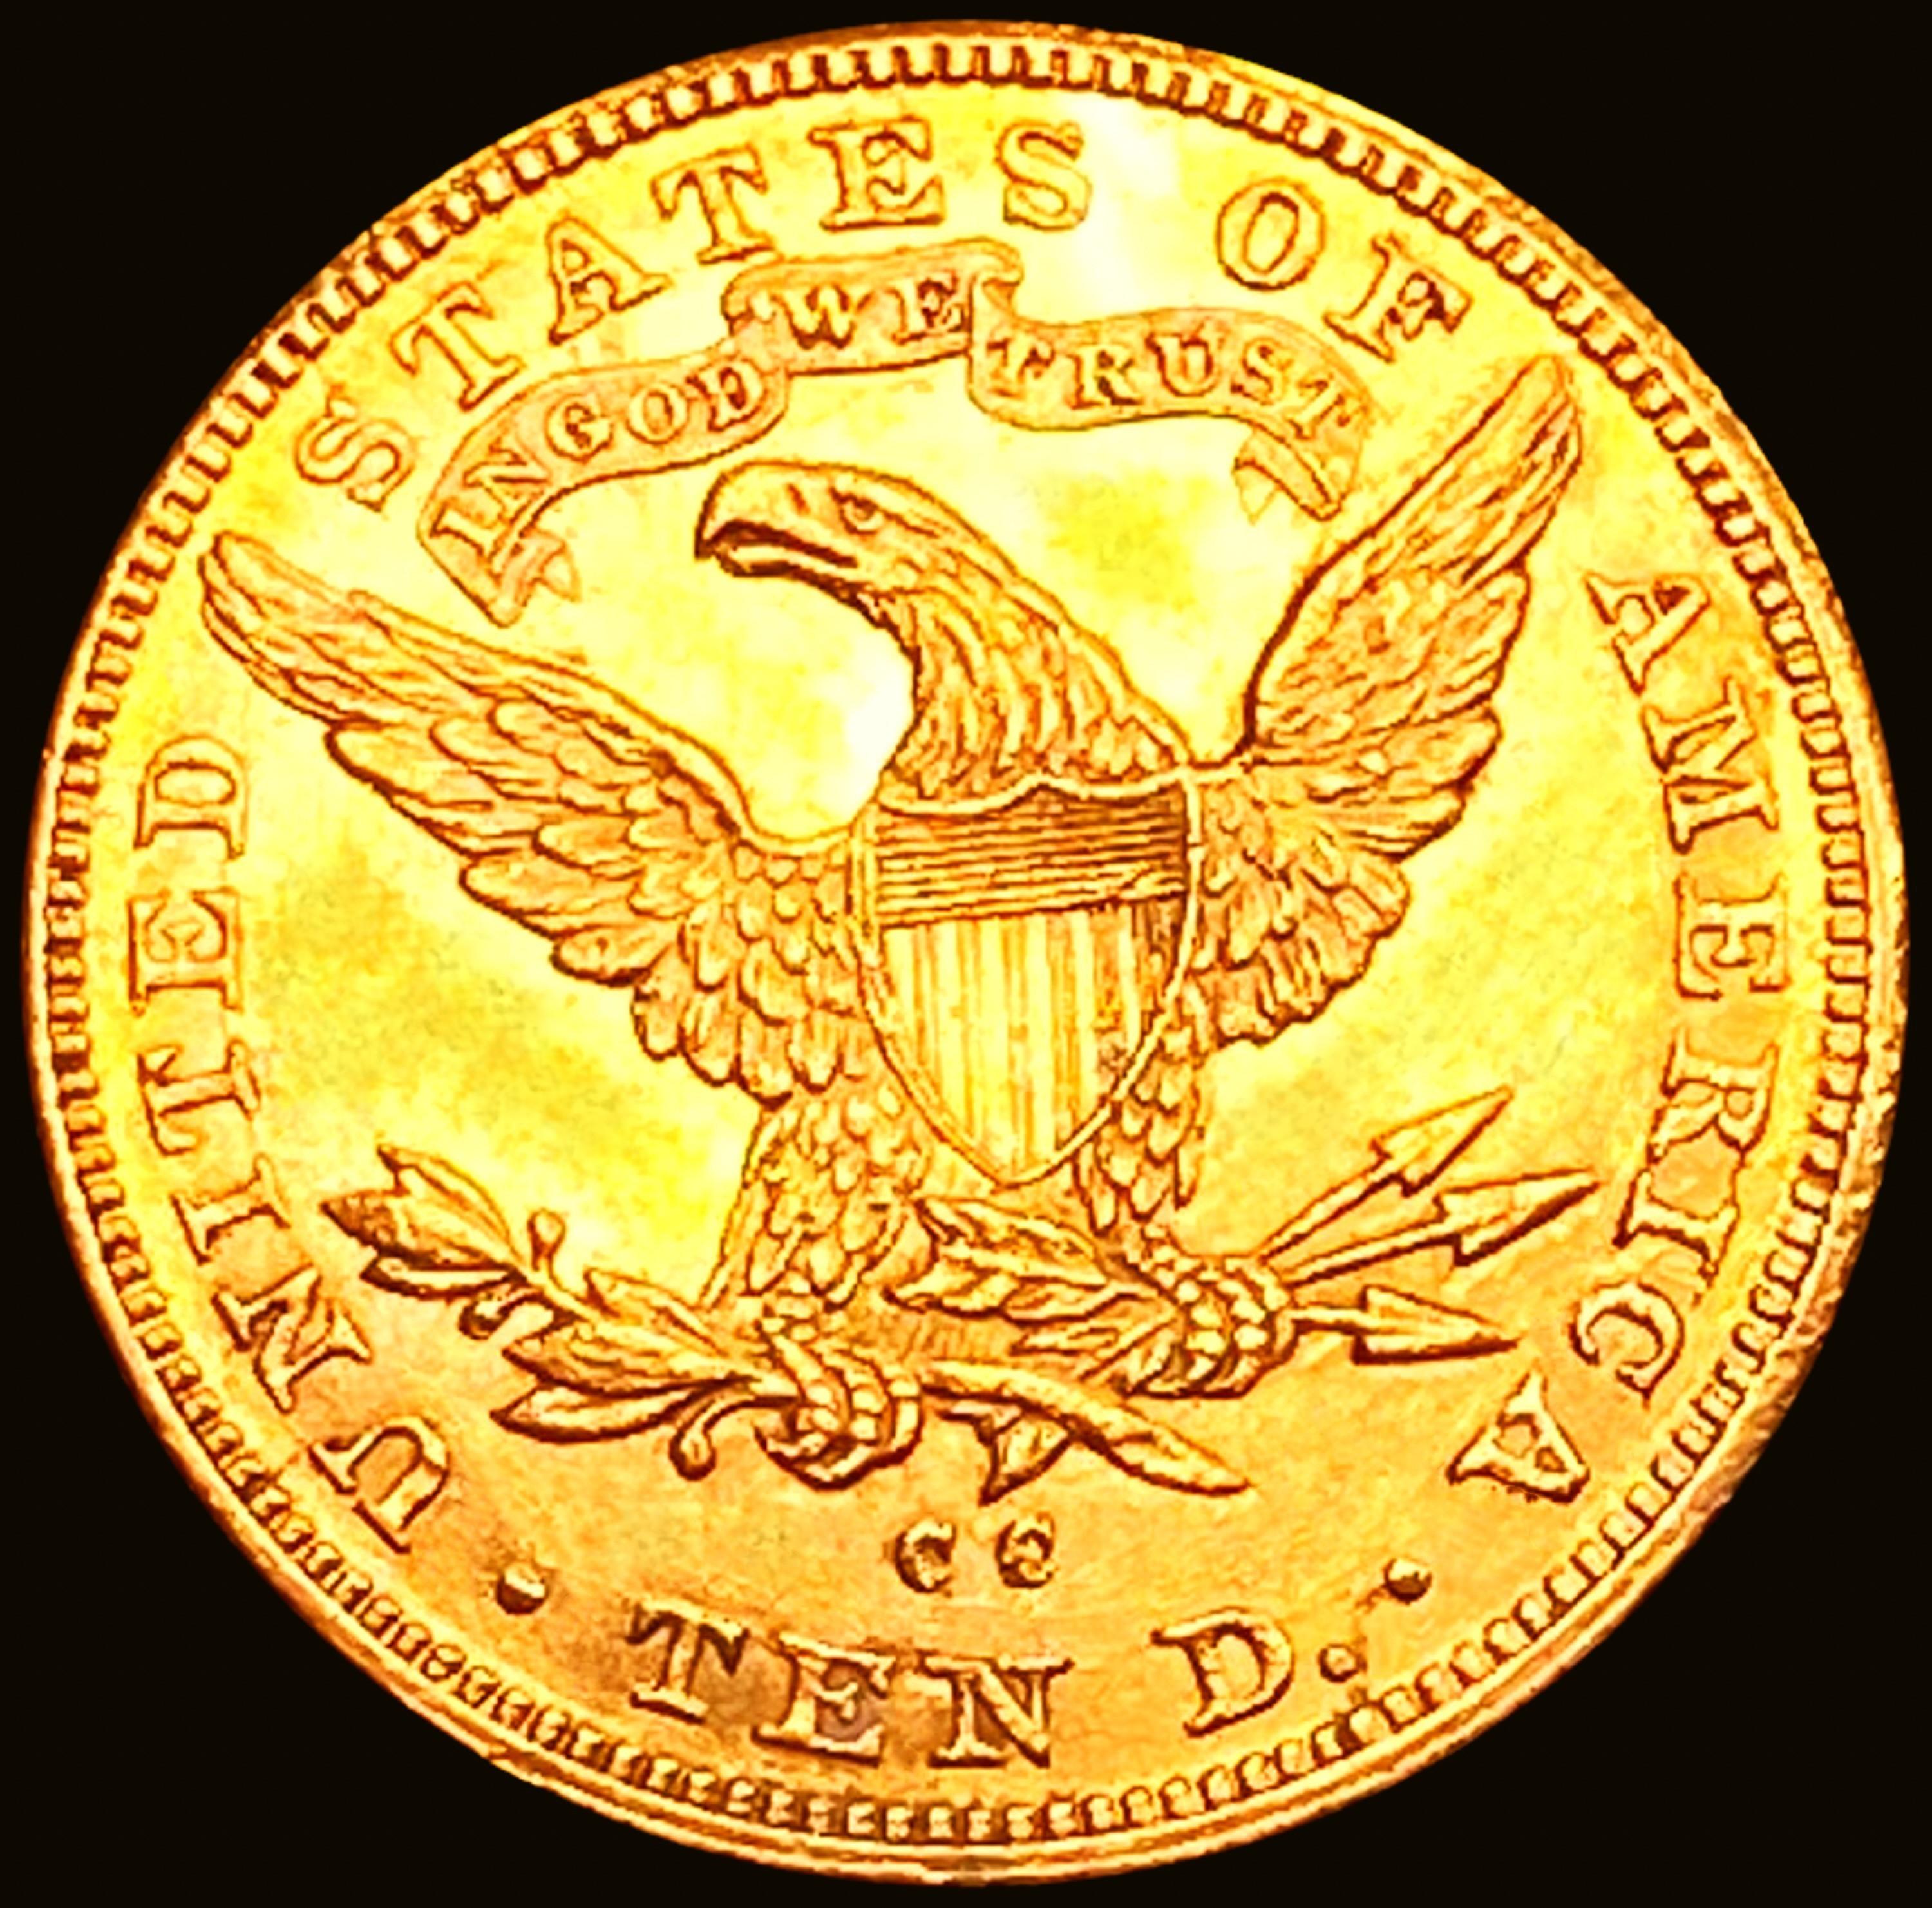 1891-CC $10 Gold Eagle CHOICE BU